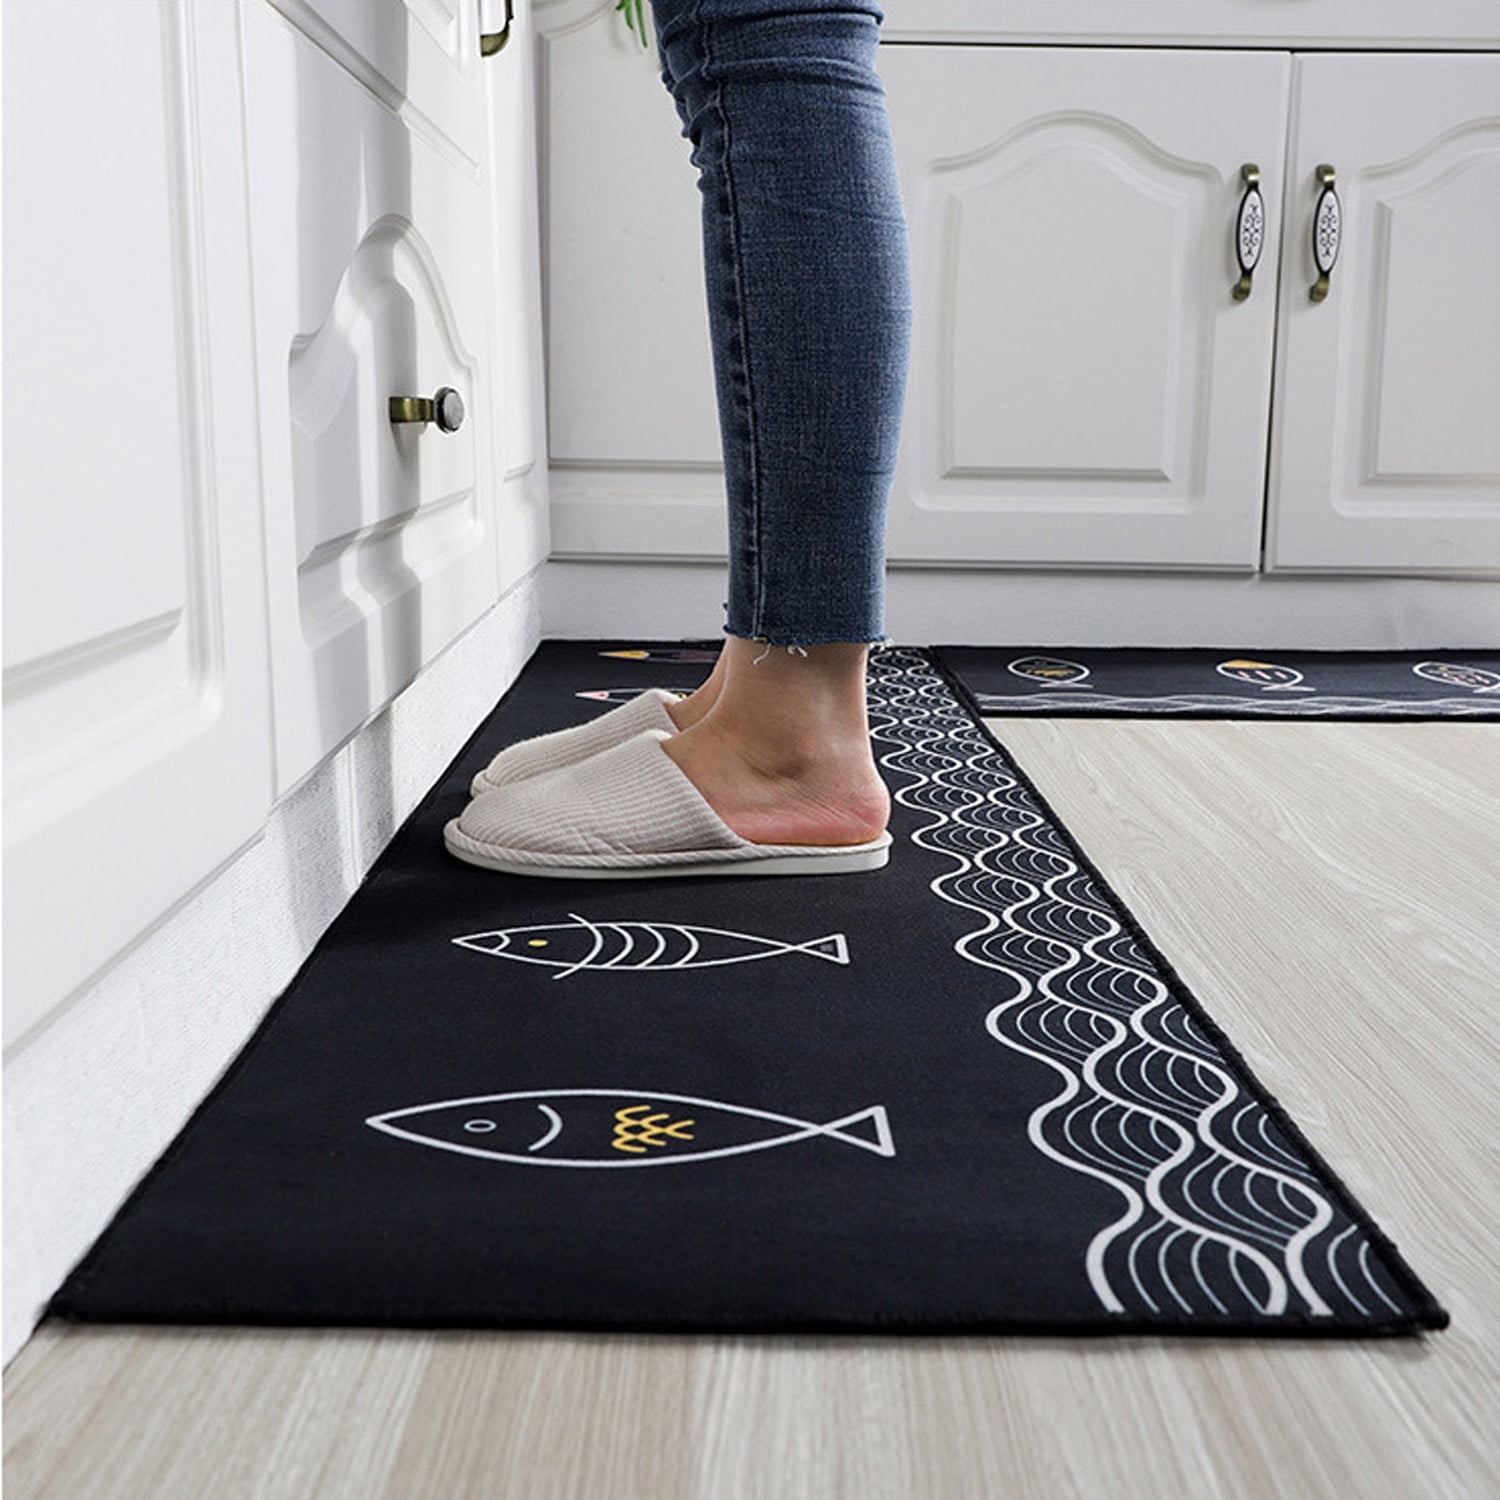 Kitchen floor decor? Runner or mat in front of sink? : r